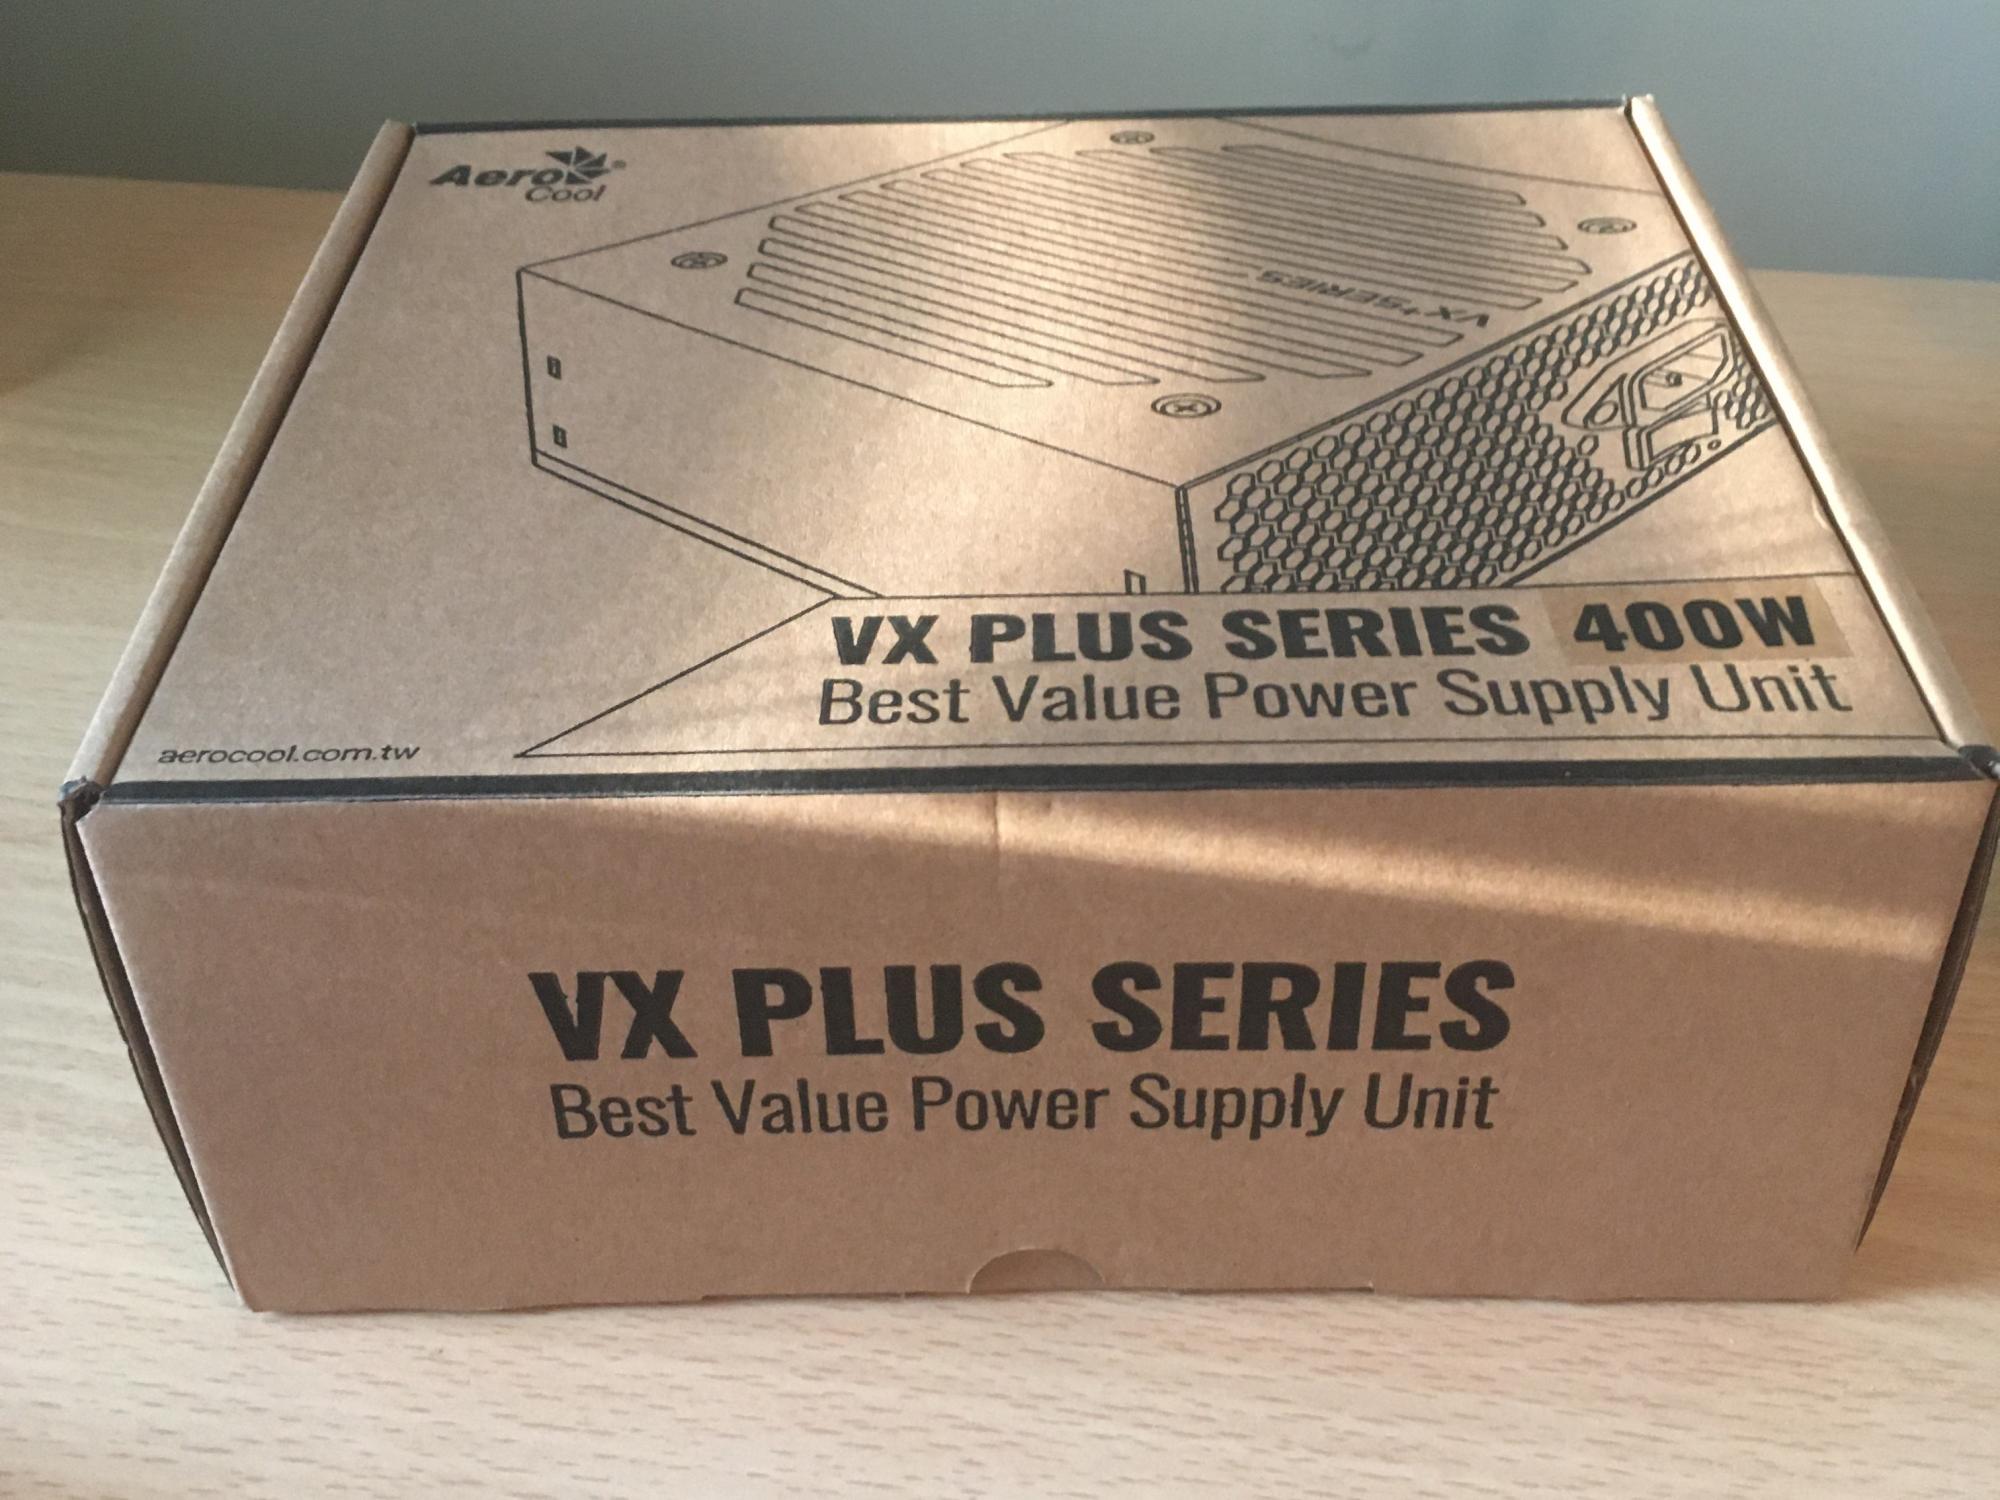 VX Plus Series 400w. RB-s500hq7-0. Power Plus at Series Pack.